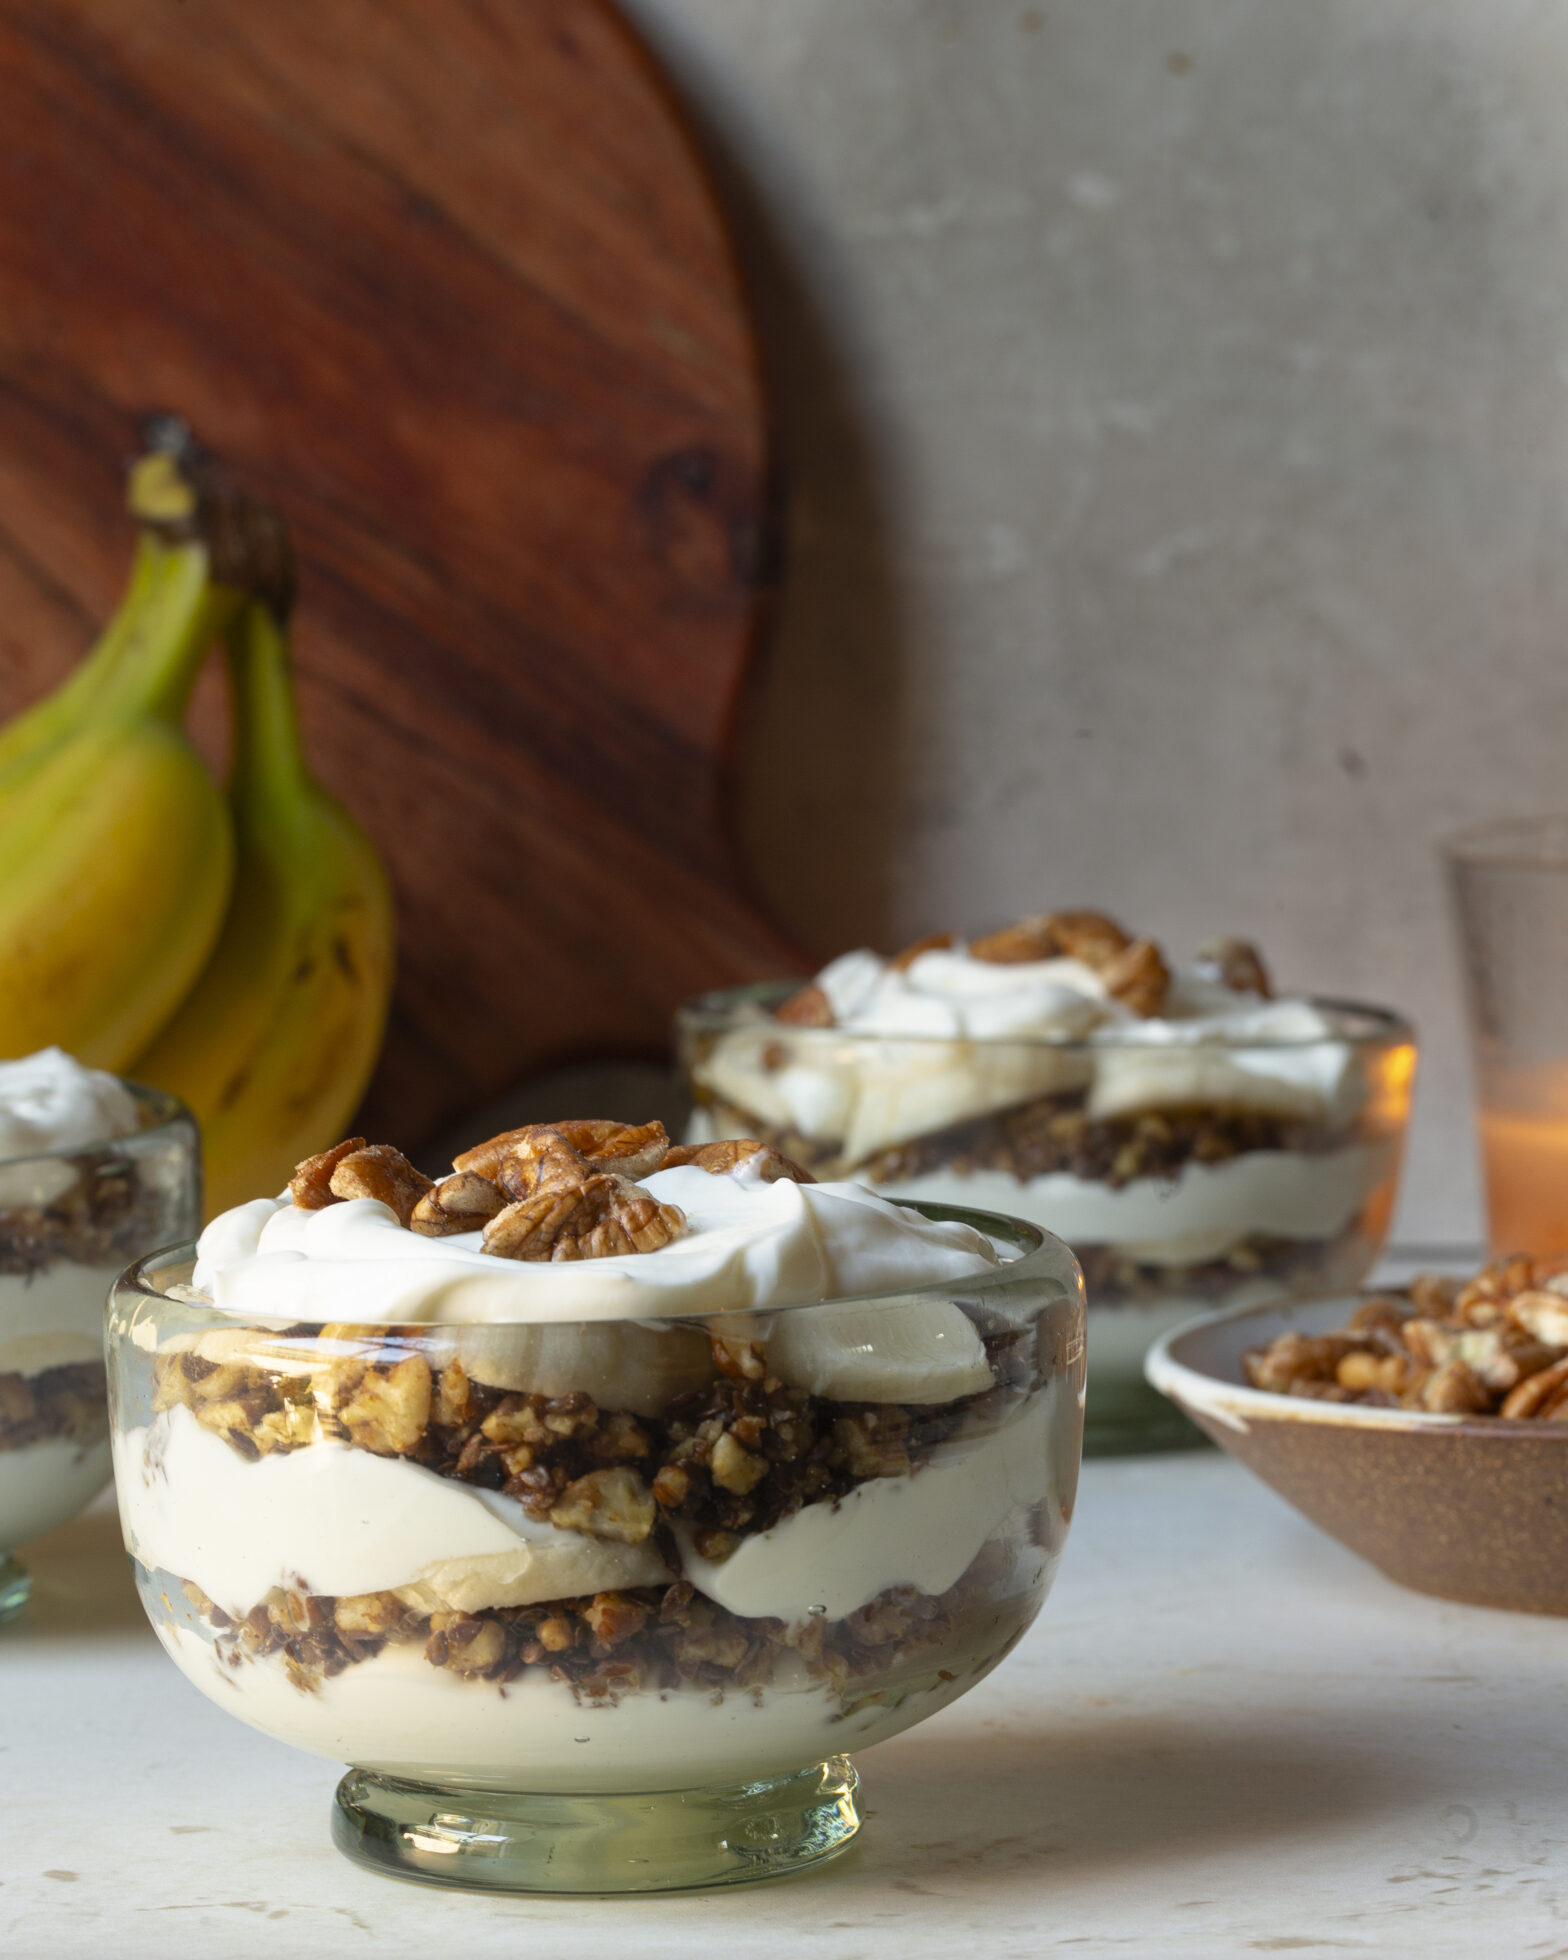 Pecan “Crumble” and Banana Yogurt Cups